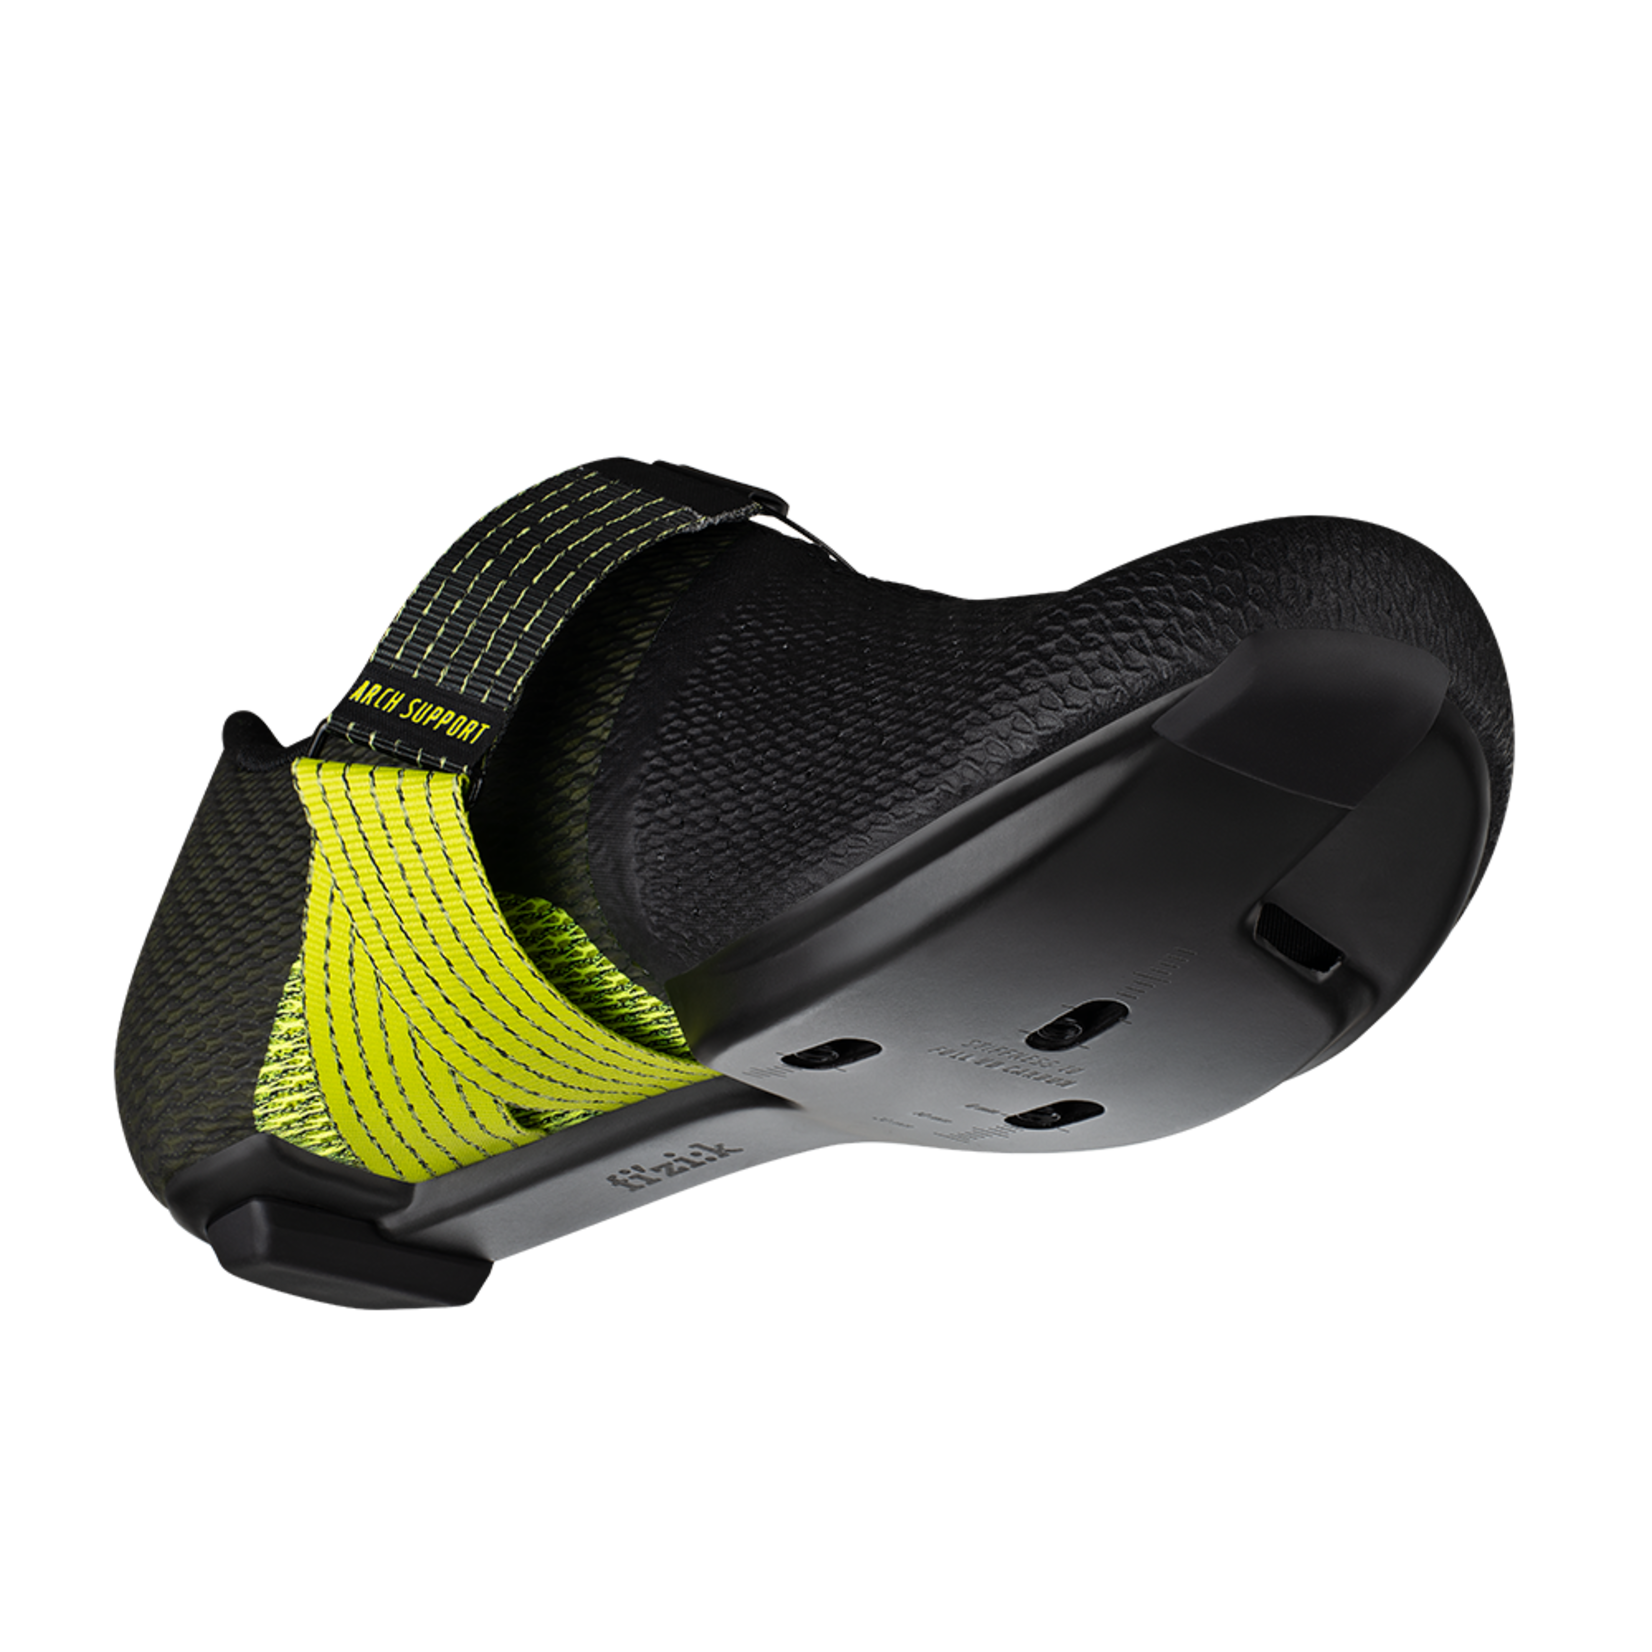 Fizik Fizik Vento Stabilita Carbon PU Laminated Mesh Upper Shoes - Black/Yellow